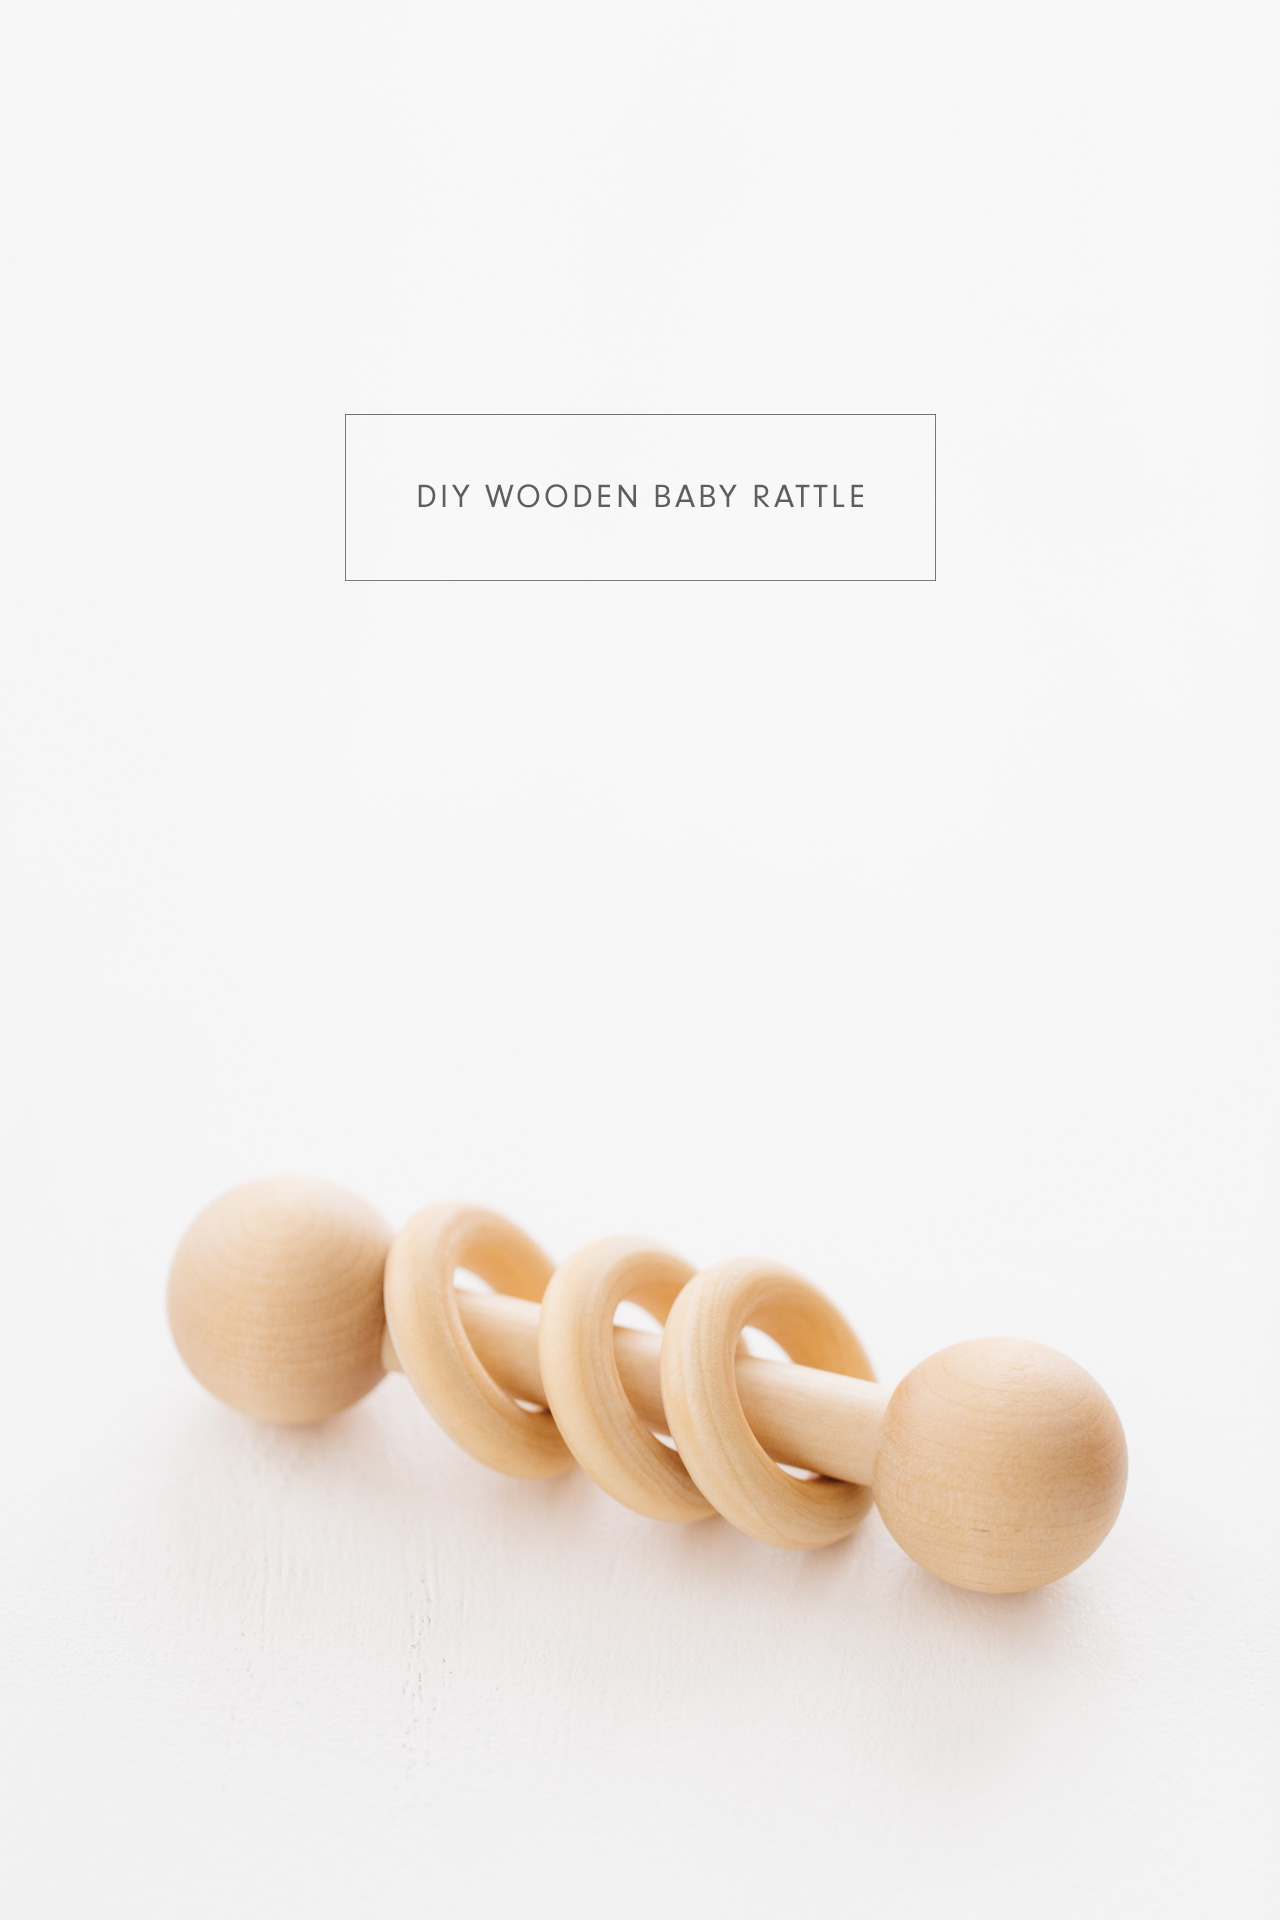 DIY Wooden Baby Rattle » Kaley Ann